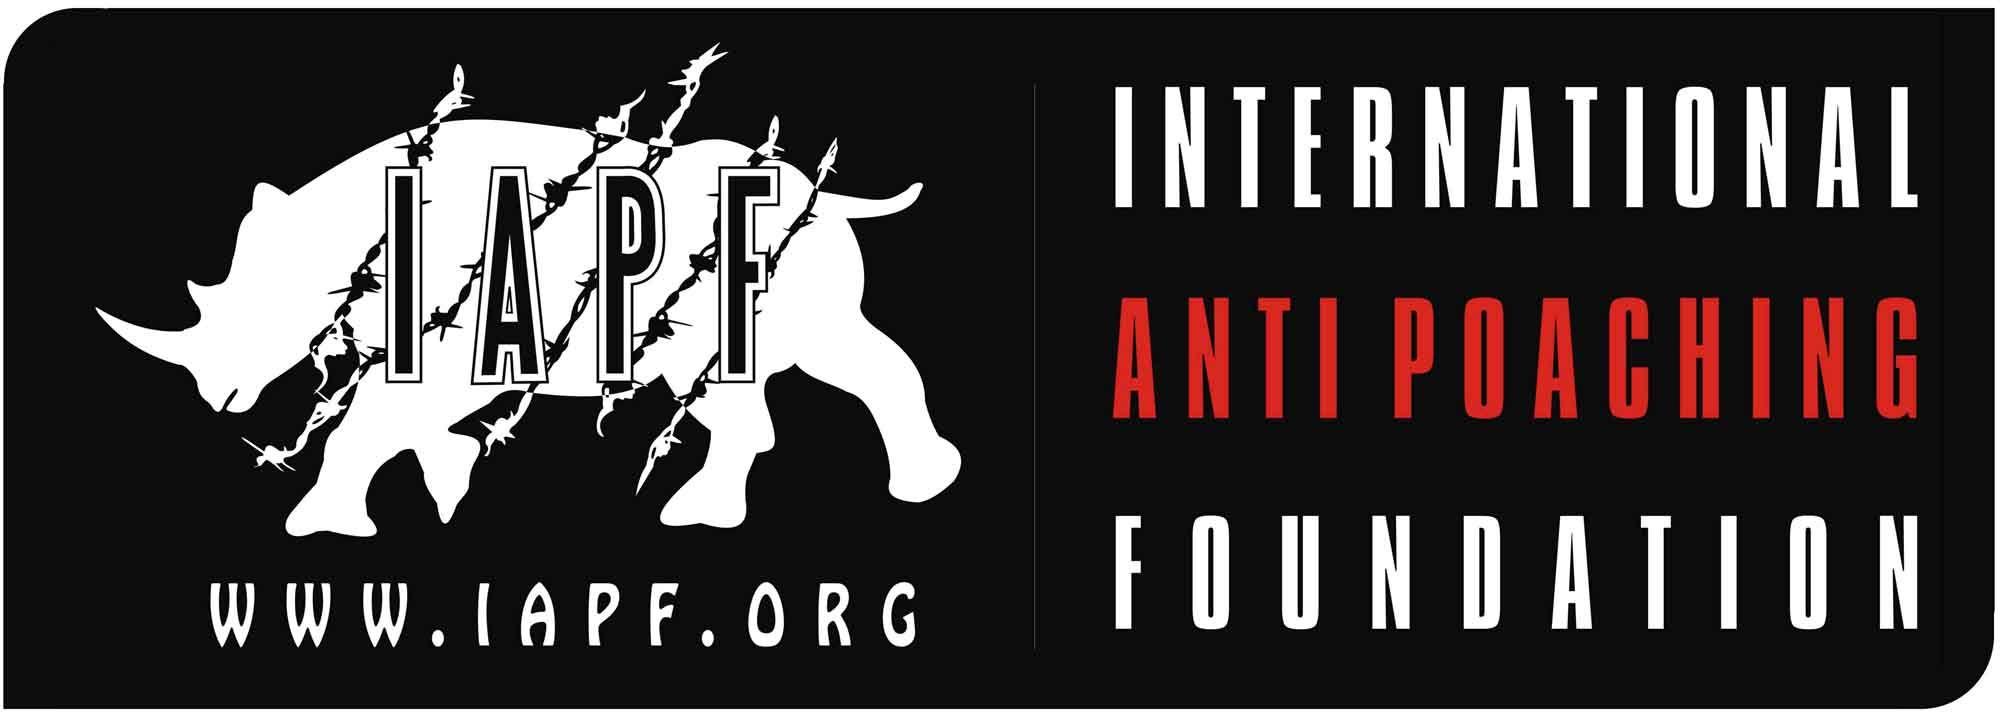 Iapf Logo - International Anti Poaching Foundation. International Anti